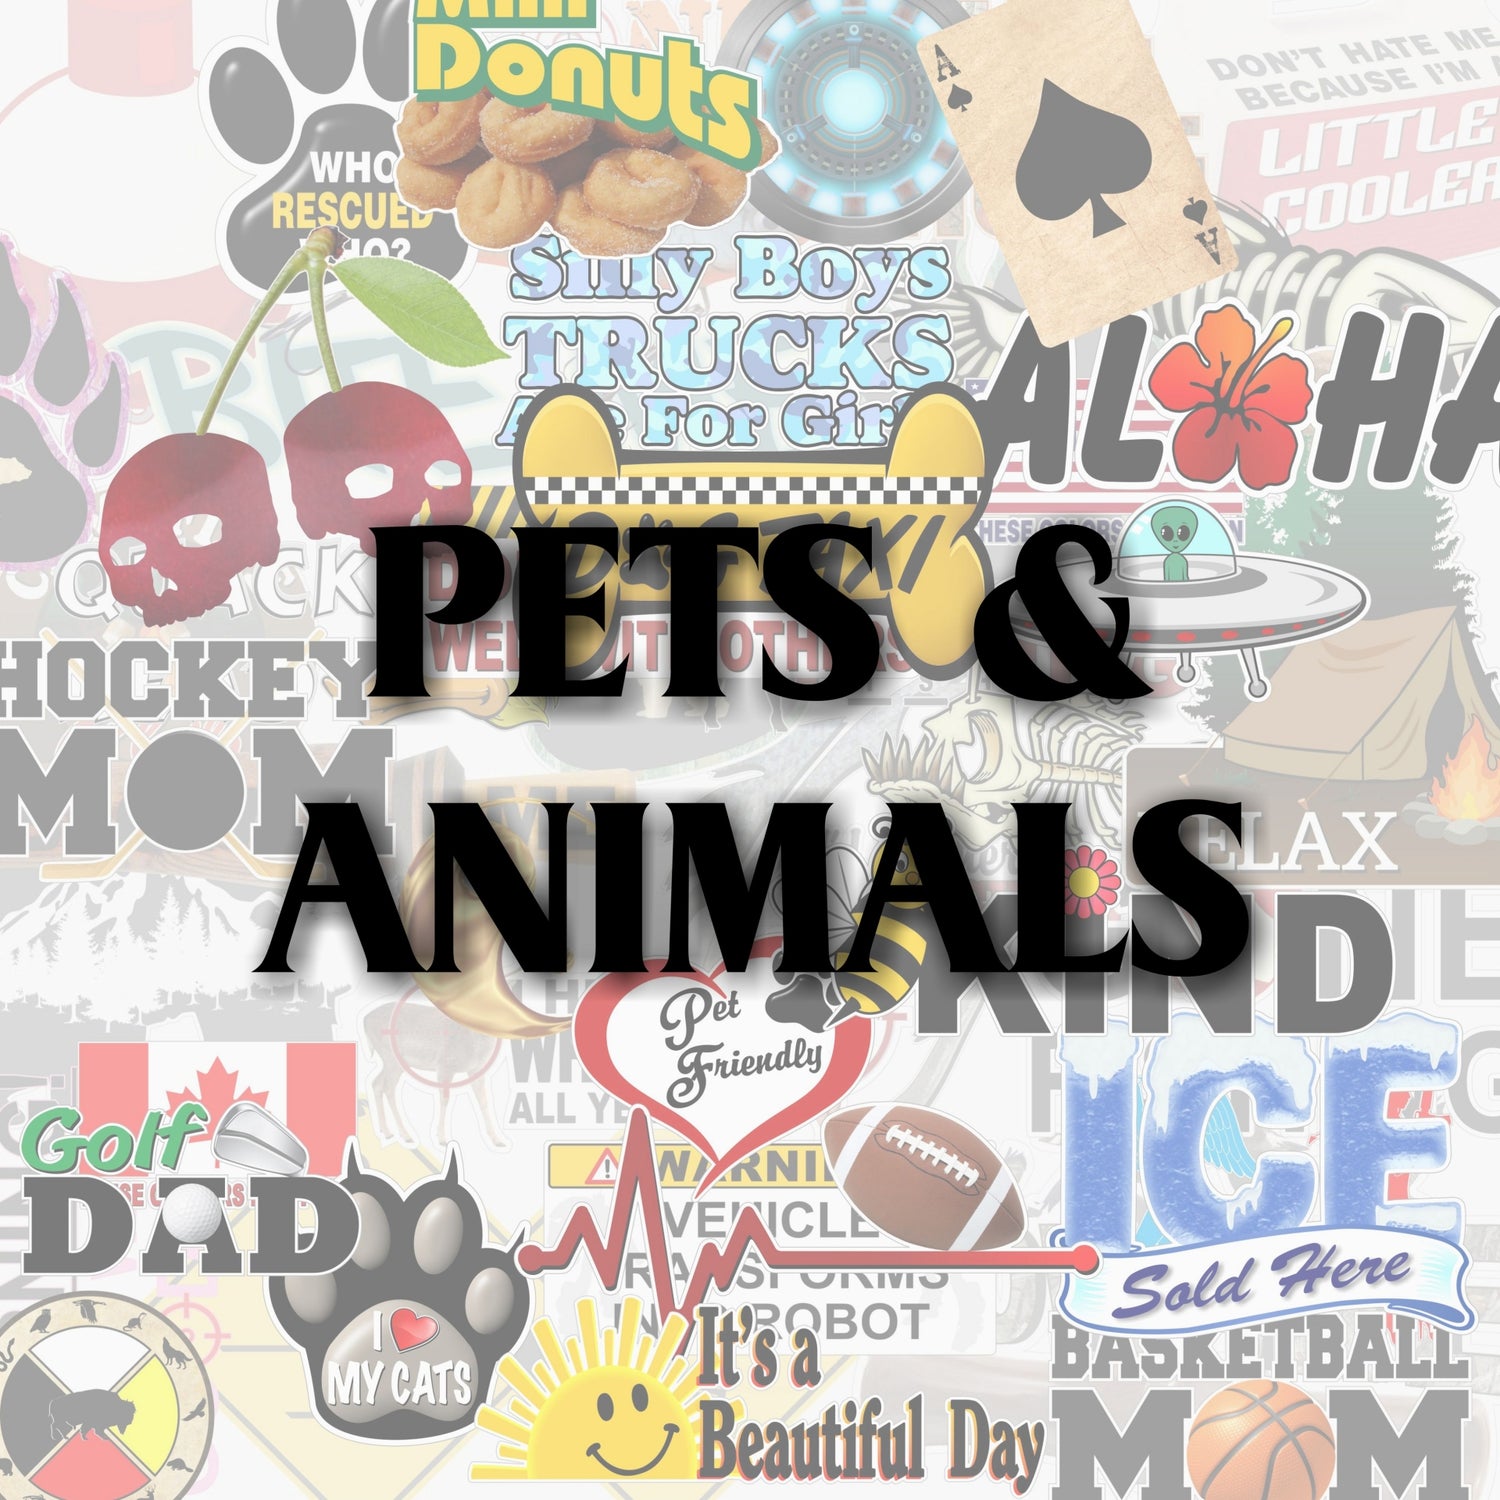 Pets & Animals